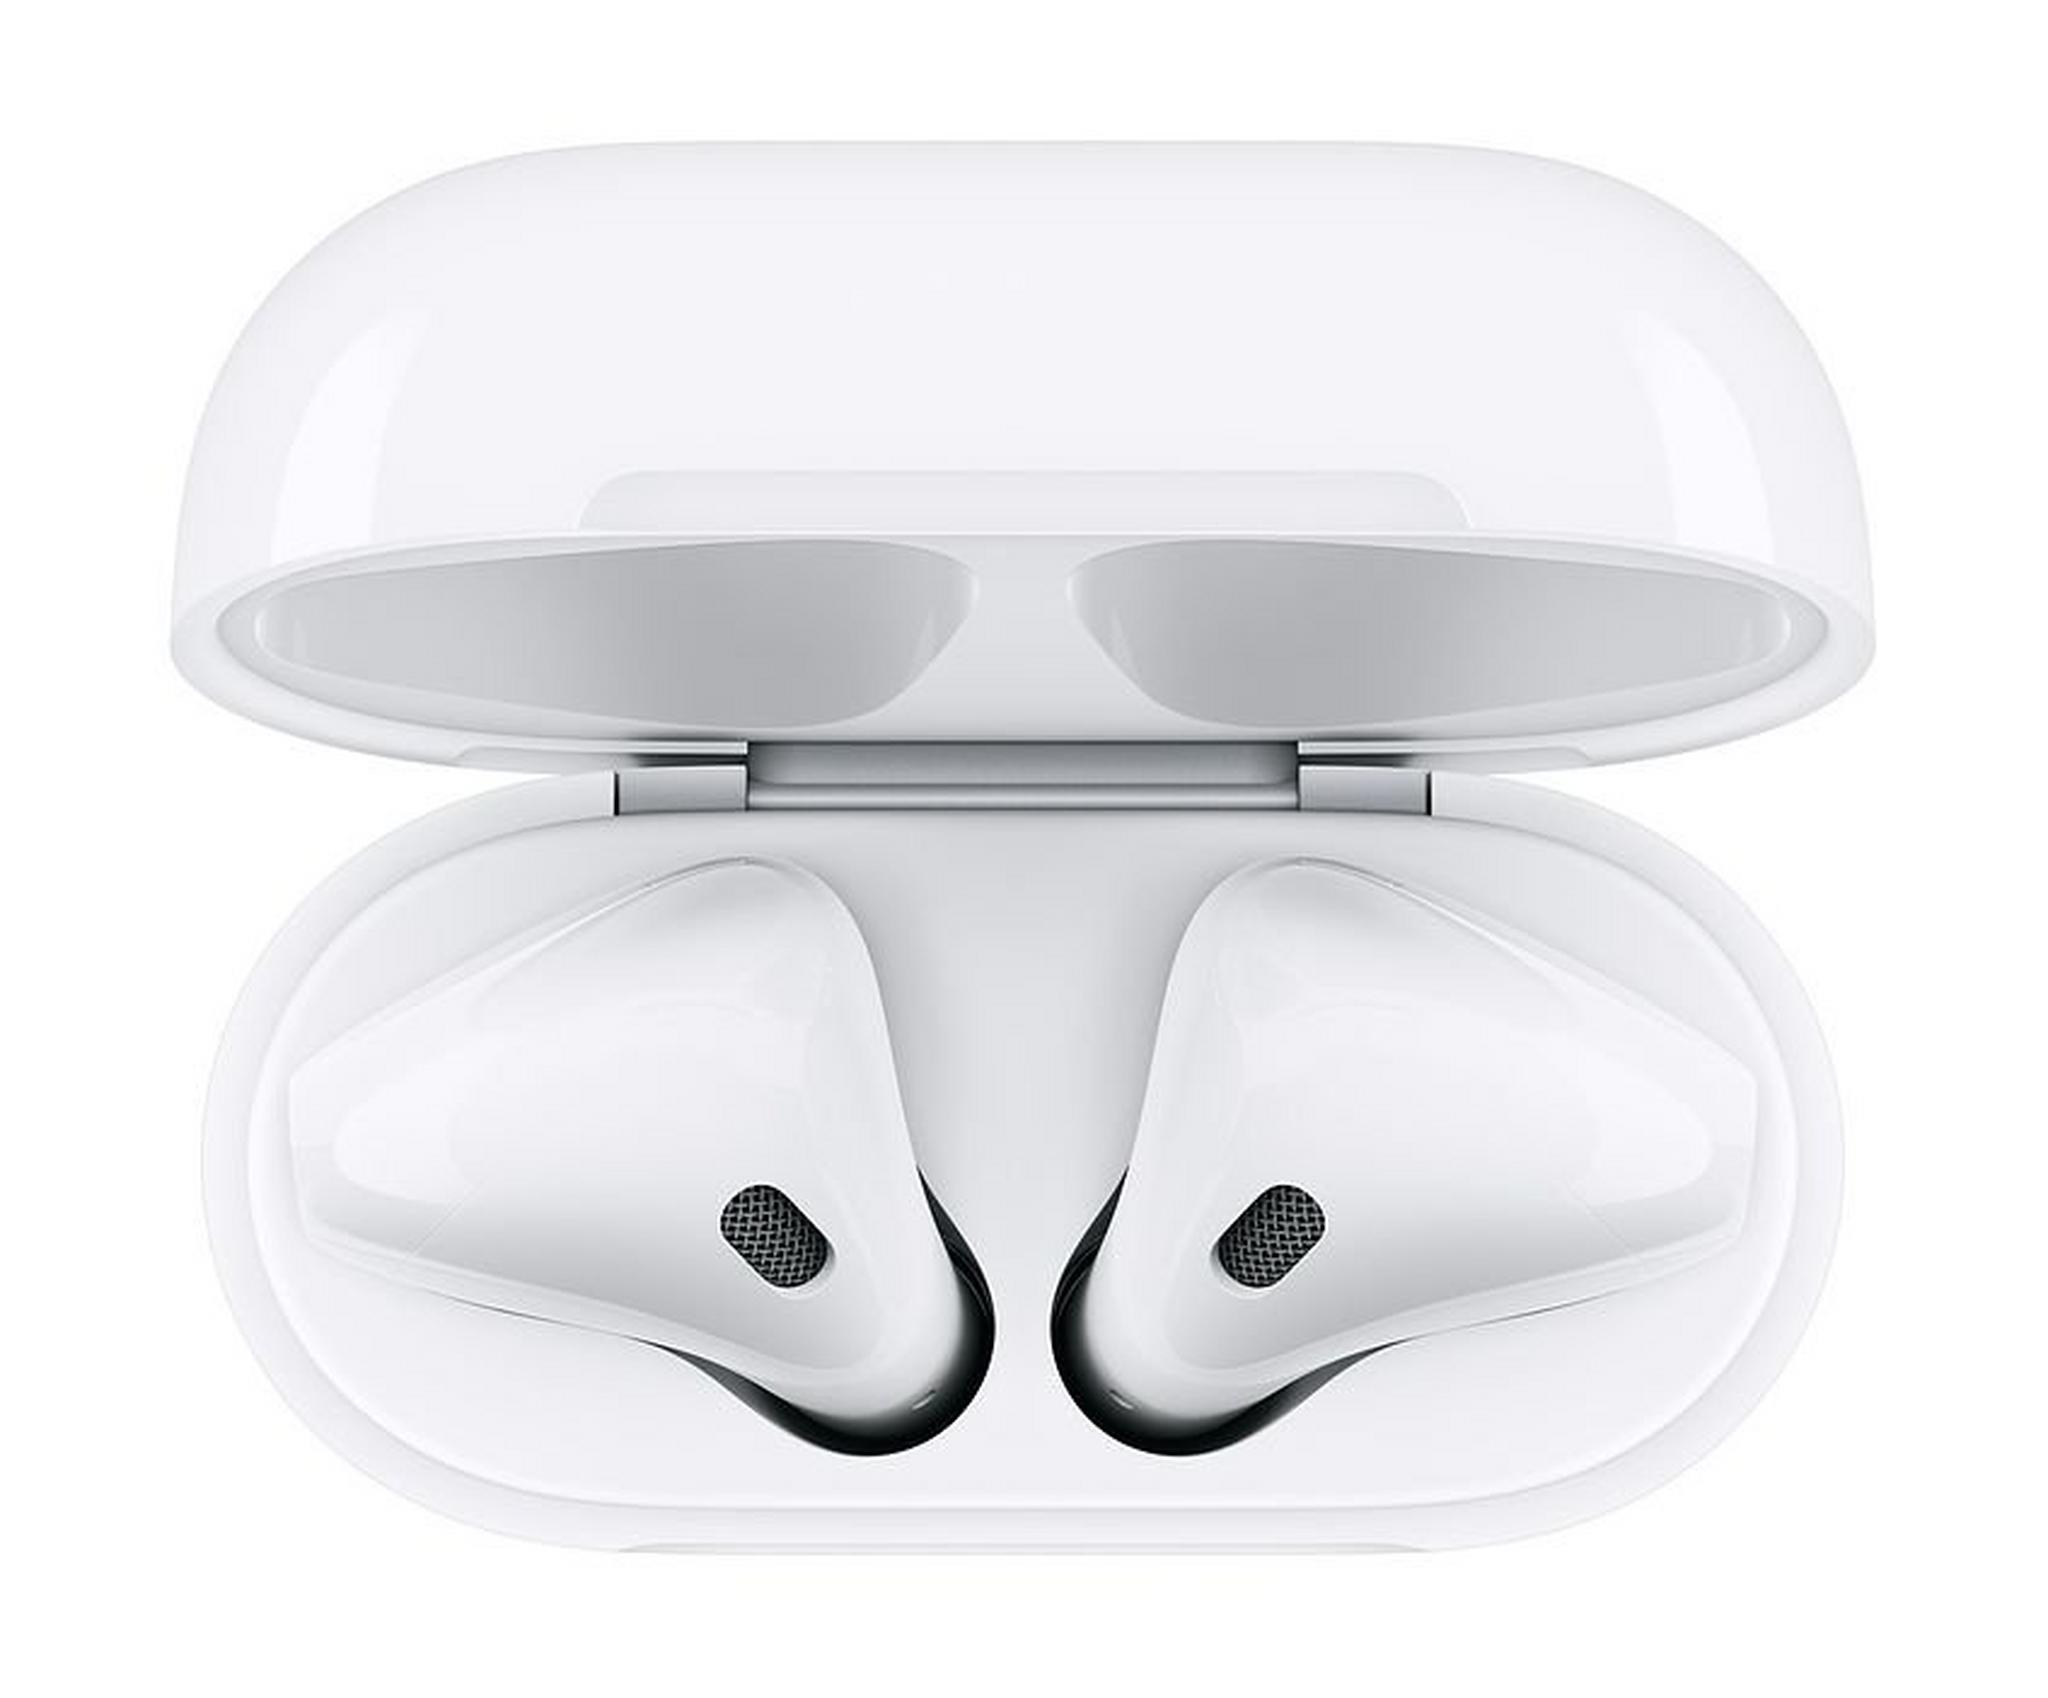 Apple Airpods 2 wireless charging - MRXJ2